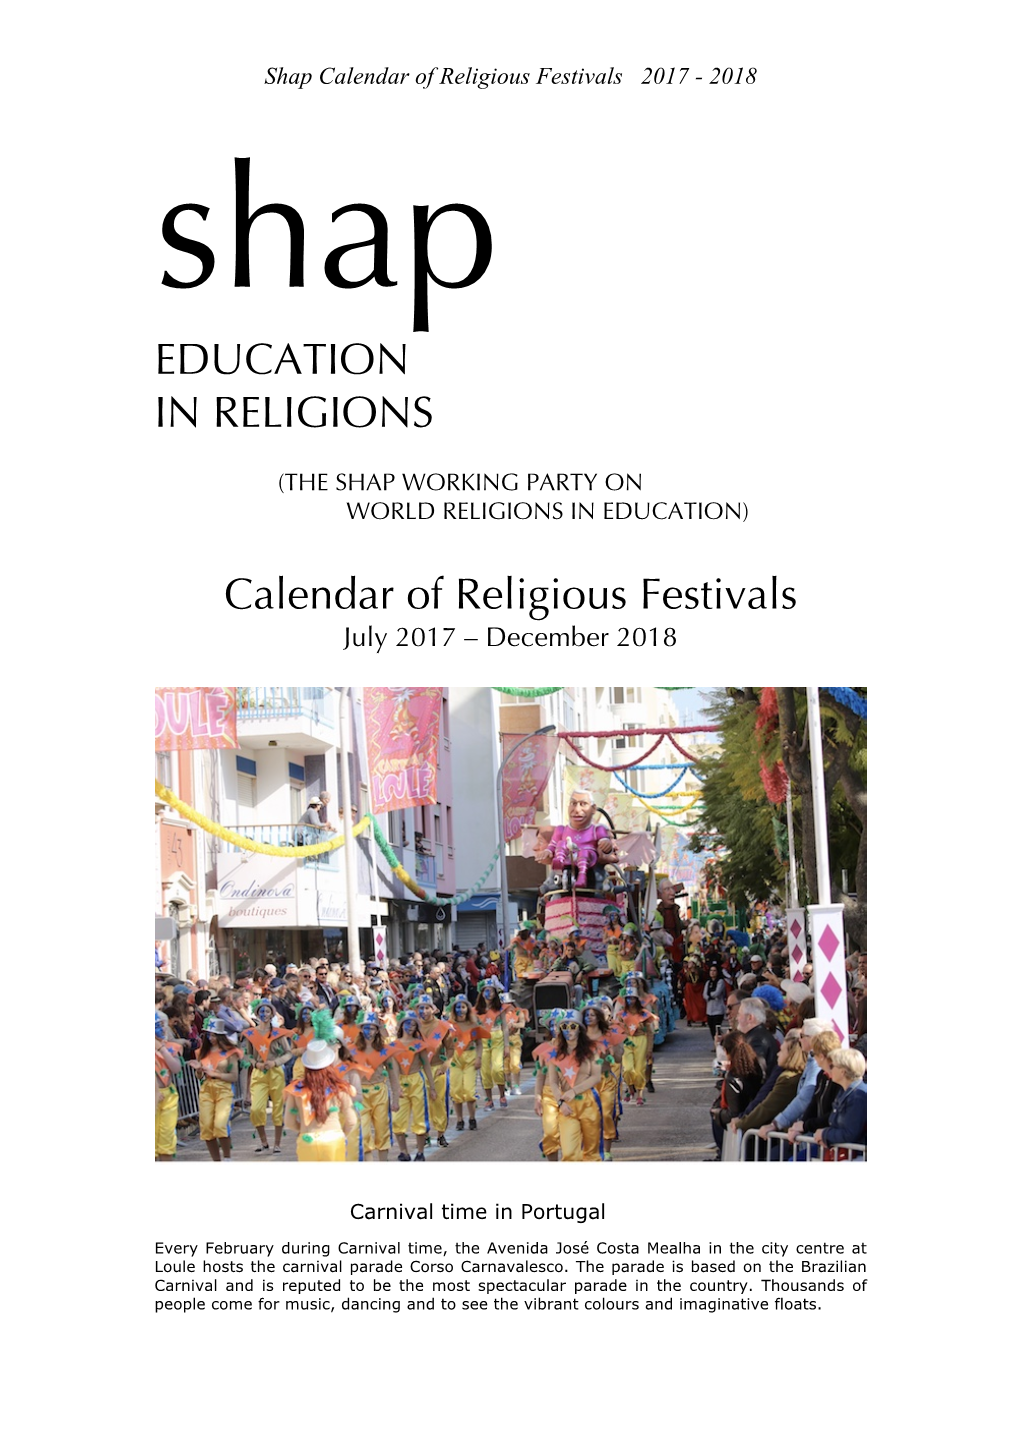 EDUCATION in RELIGIONS Calendar of Religious Festivals